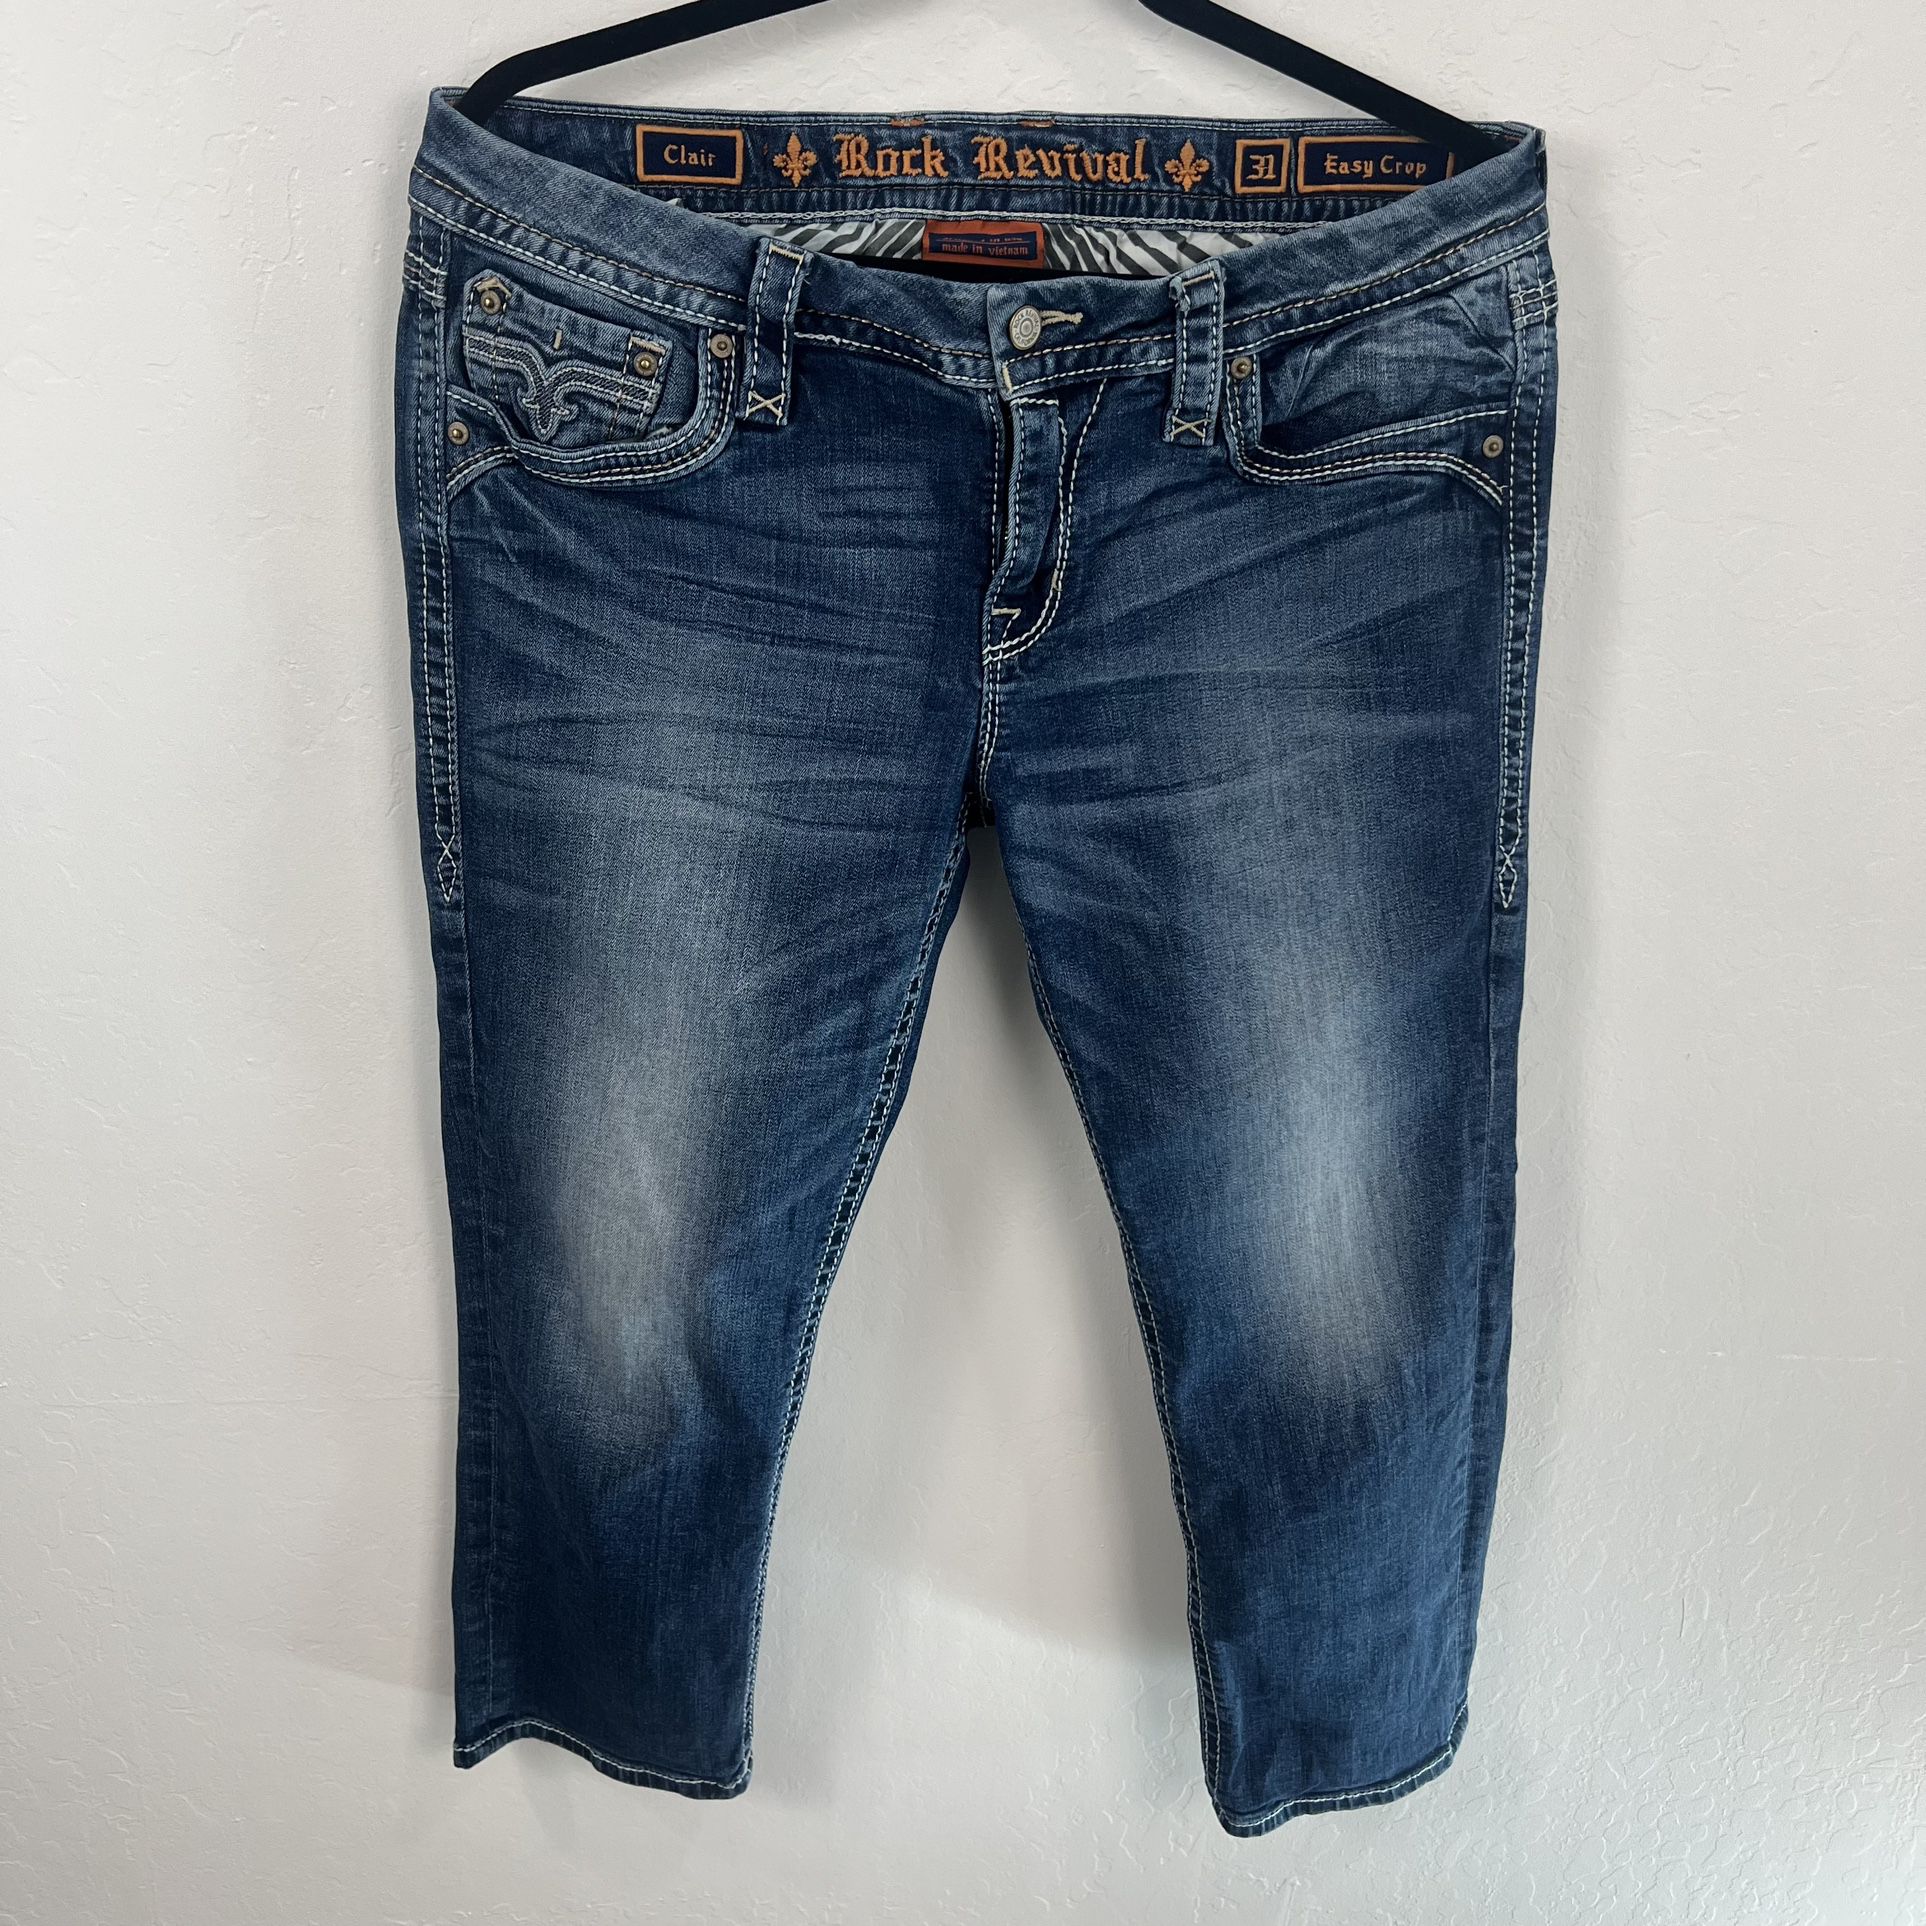 Rock Revival Clair Easy Crop Jeans Size 31